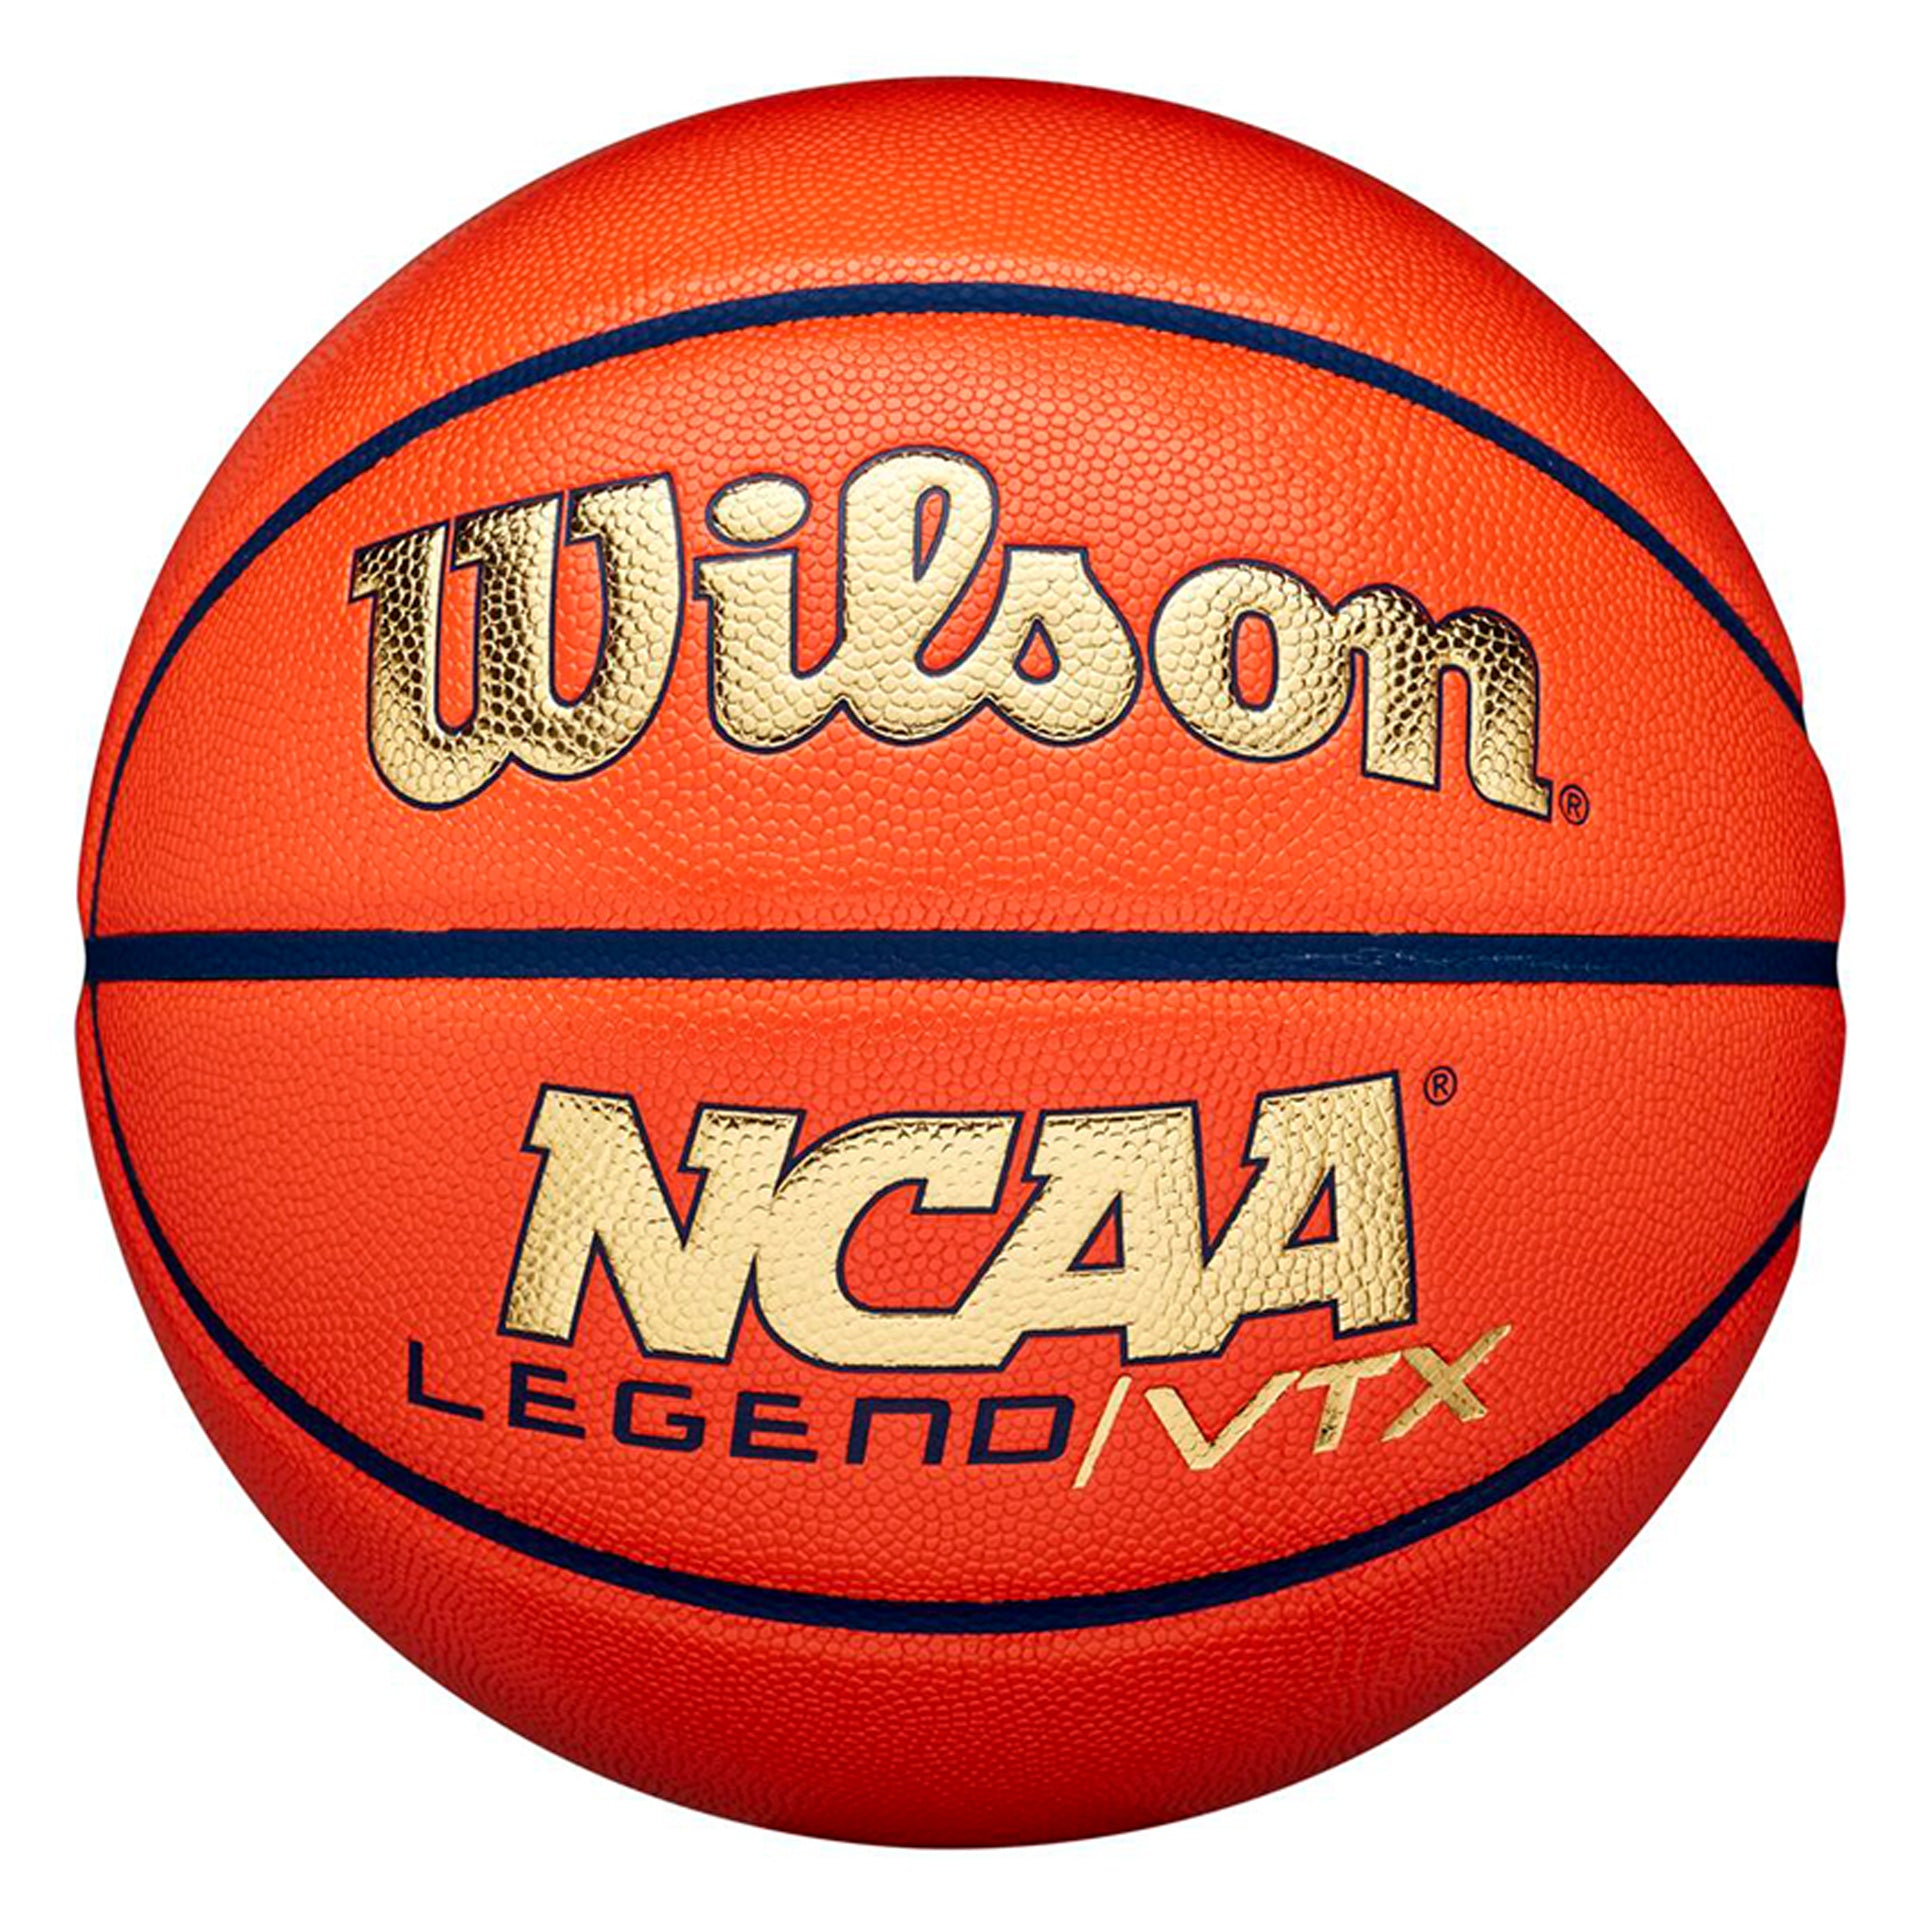 Balón Baloncesto Wilson Ncaa Legend Vtx Bskt Orange/Gold Talla 7